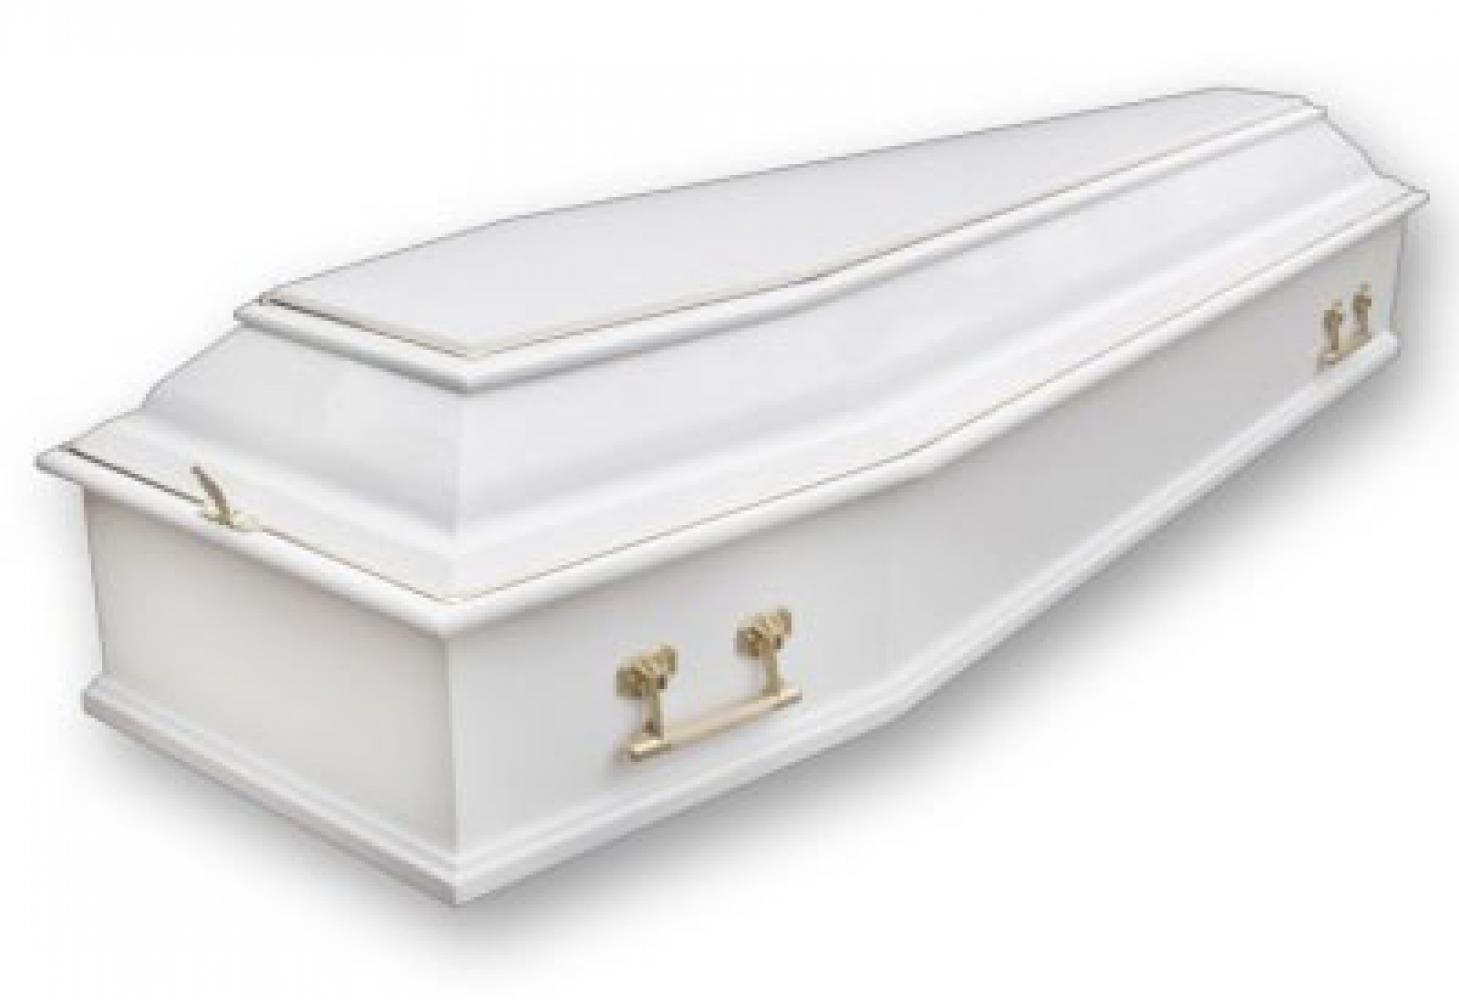 Coffin download. Гроб б4 стандарт. Гроб б6 стандарт. 4б стандарт гроб белый. Гроб б-6 стандарт белый.